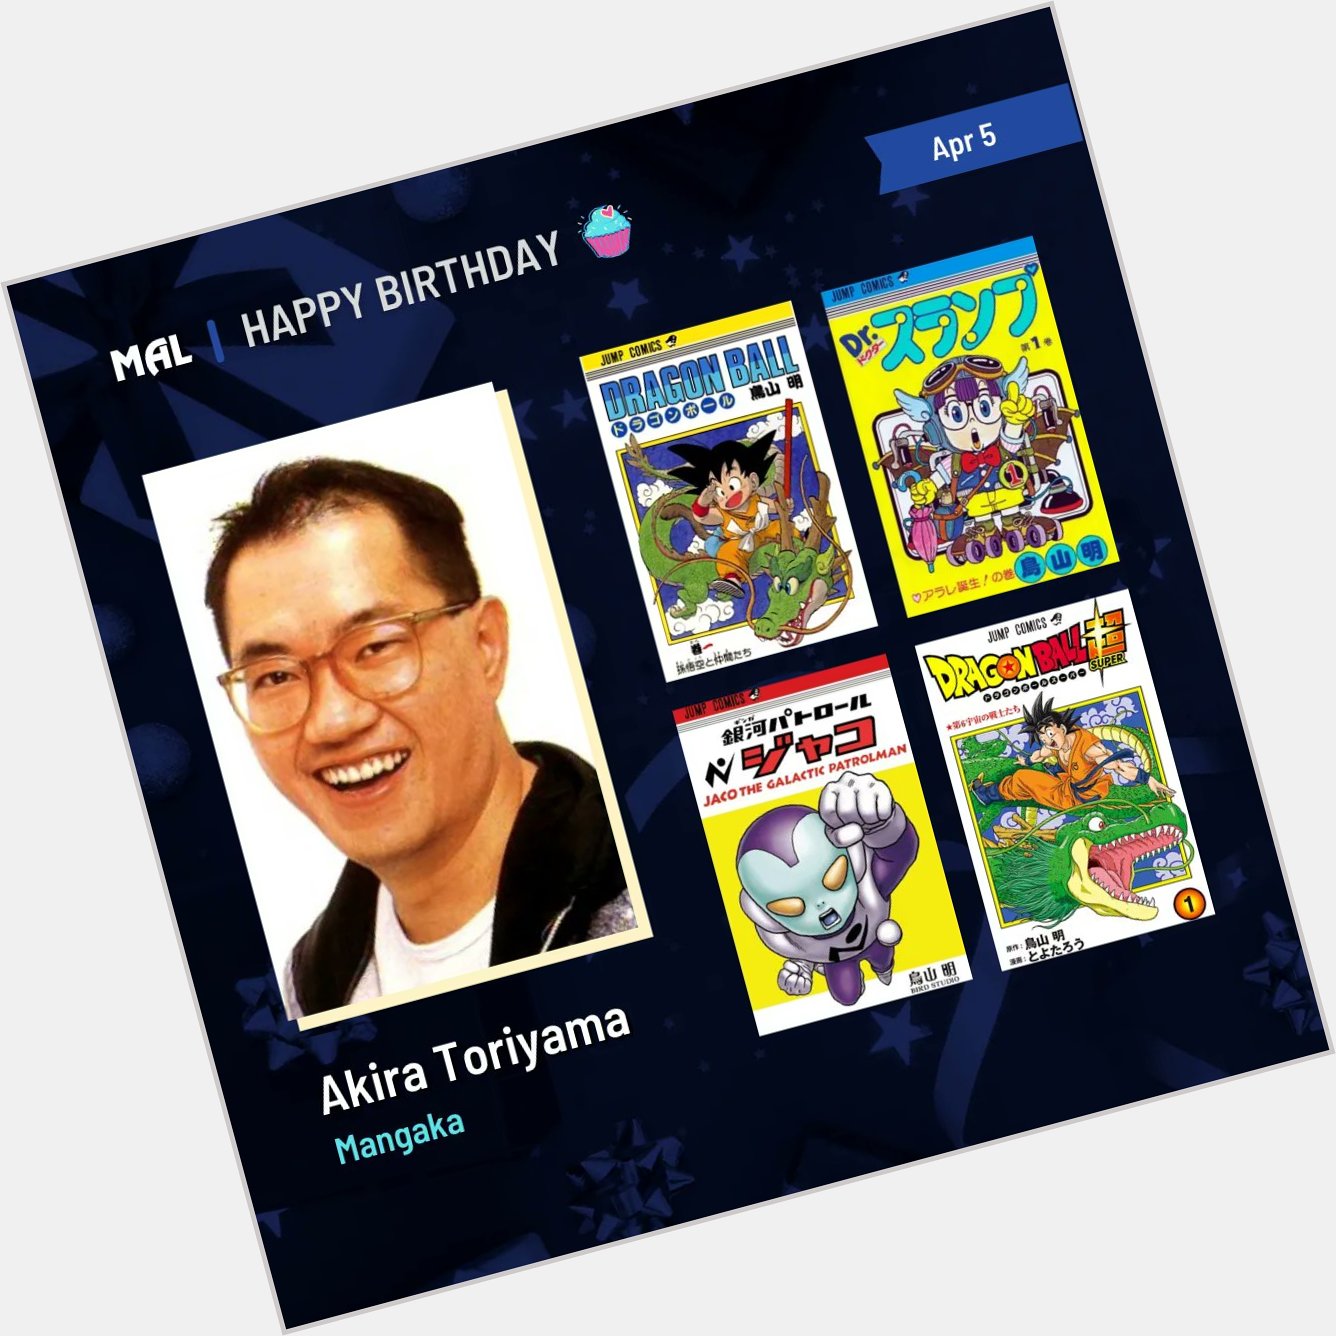 Happy Birthday to Akira Toriyama! Full profile:  